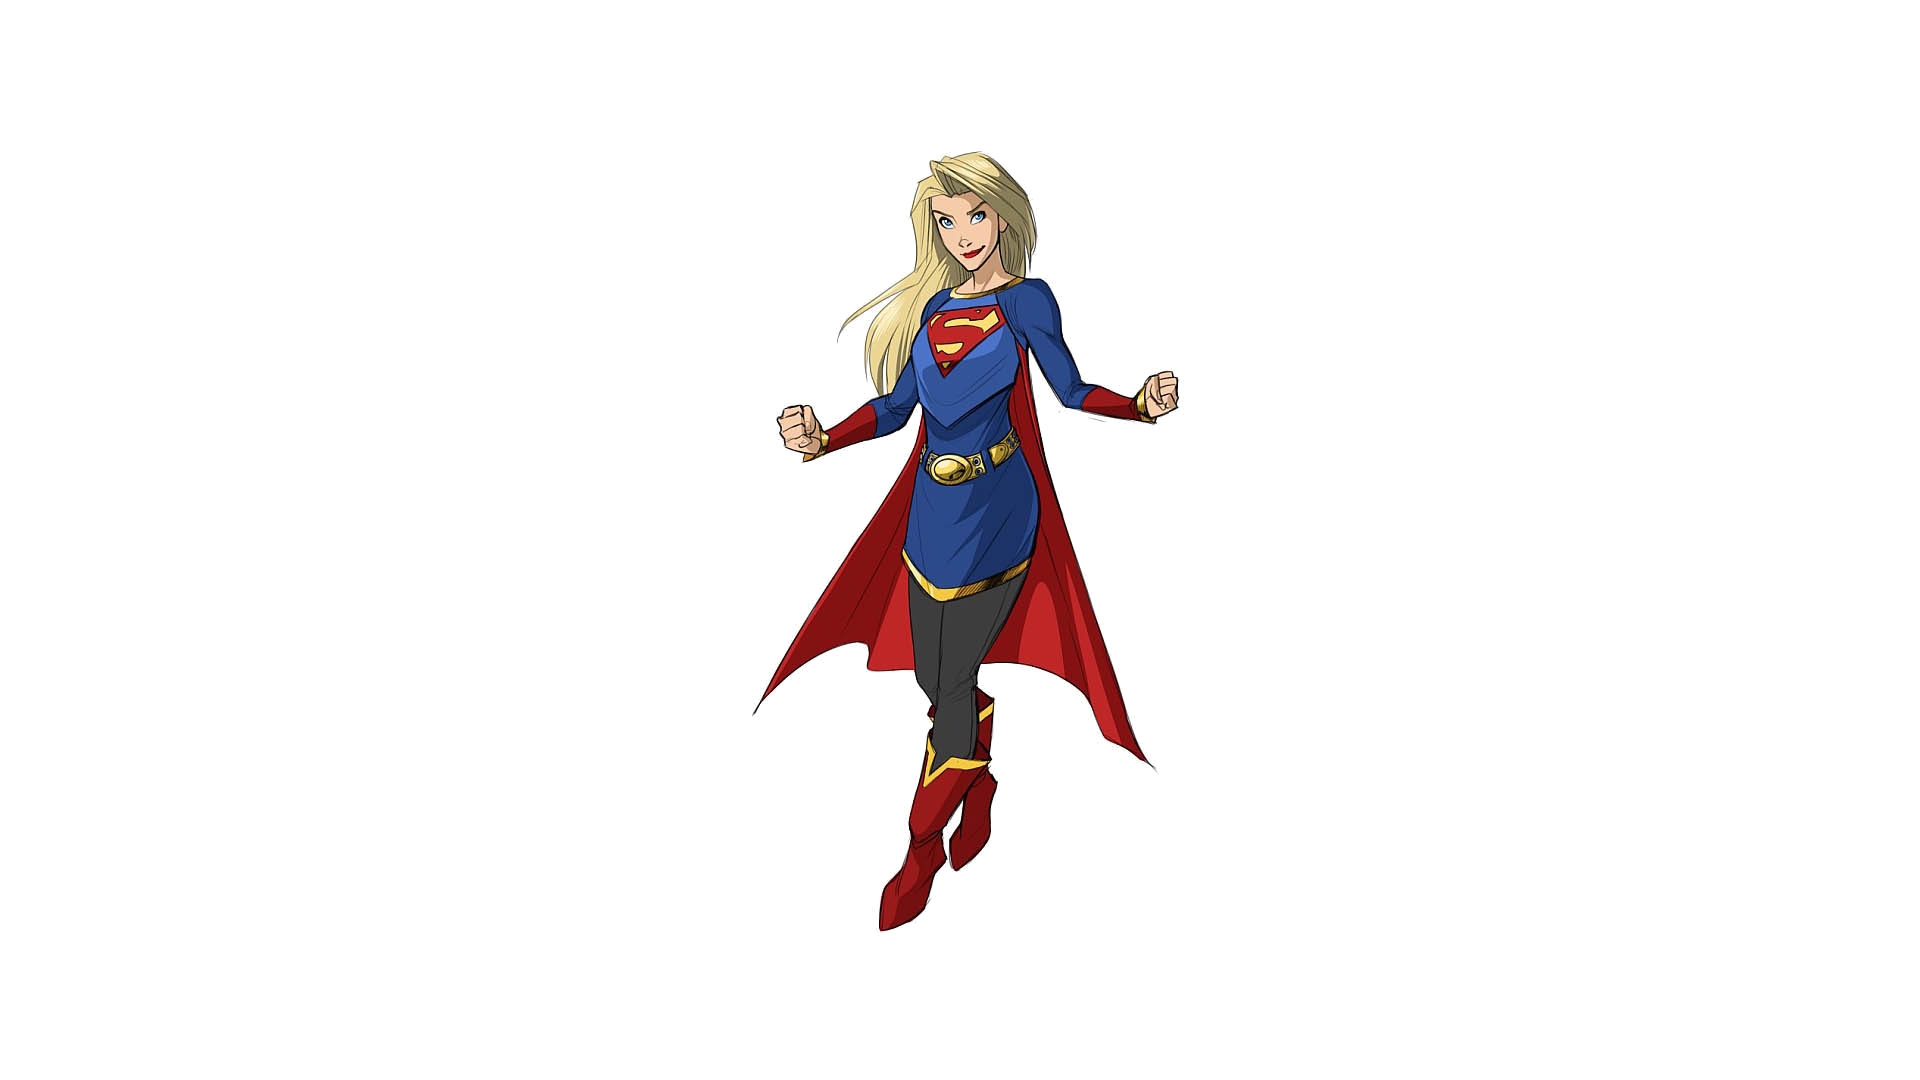 Descarga gratuita de fondo de pantalla para móvil de Supergirl, Superhombre, Historietas.